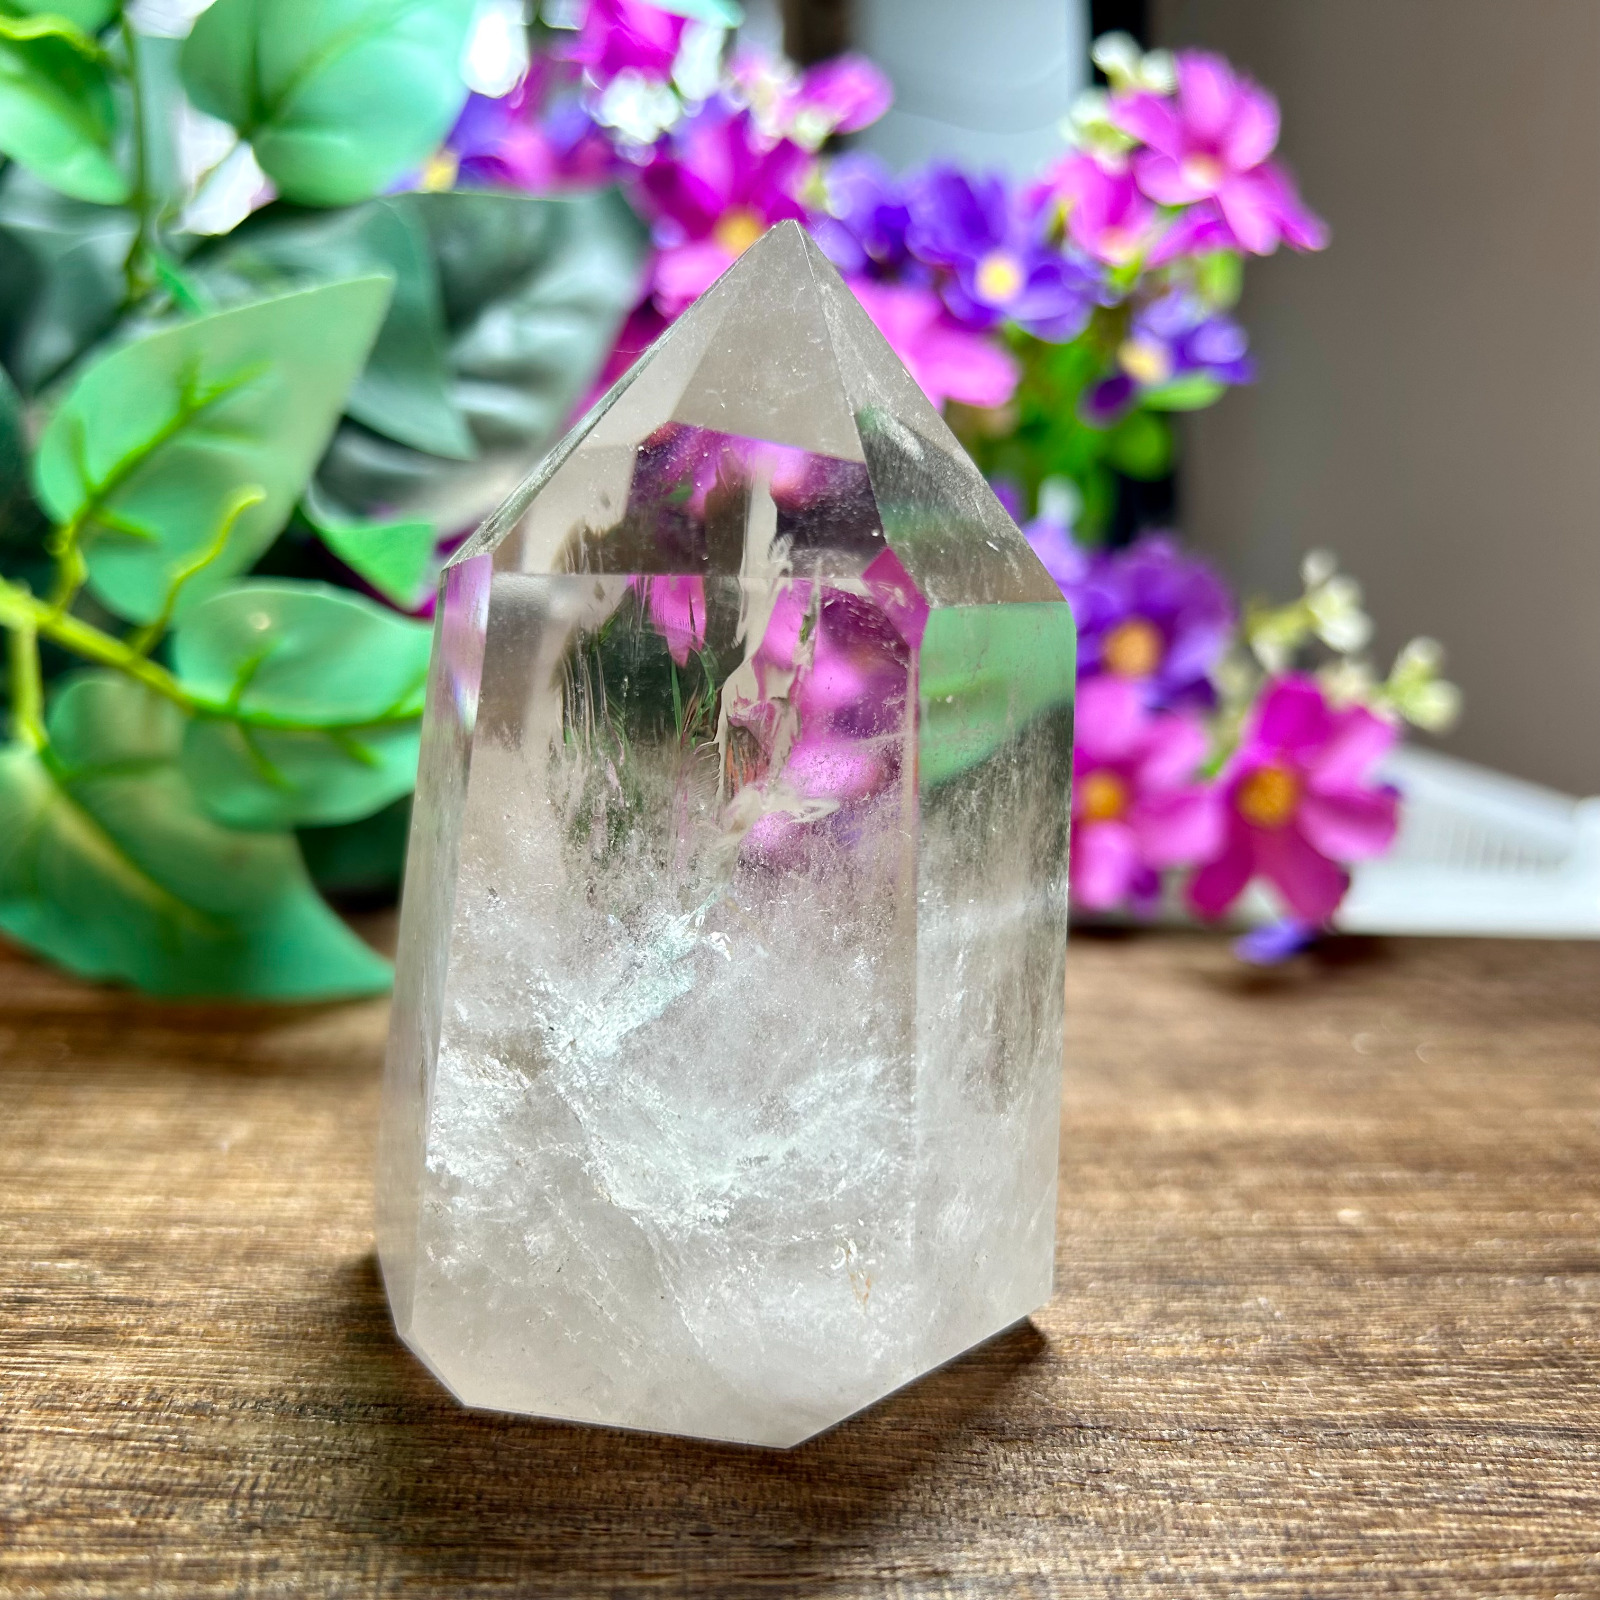 330g natural clear quartz Crystal tower point healing